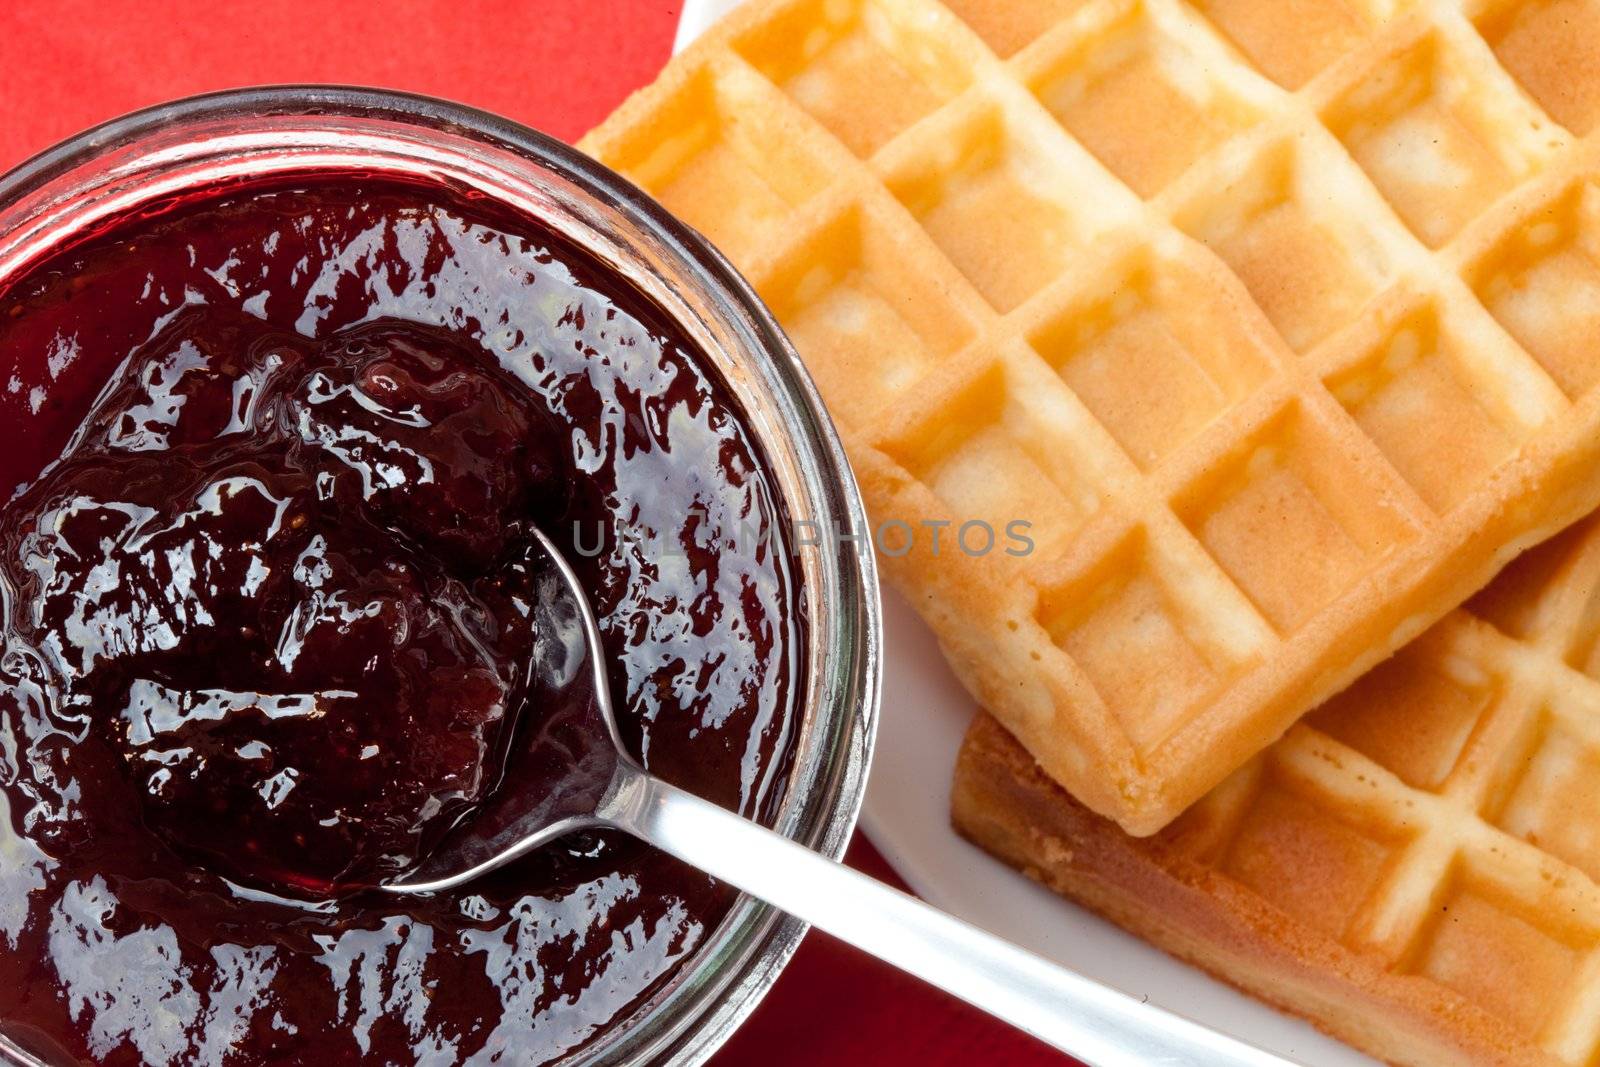 Breakfast with waffles and jam by Wavebreakmedia